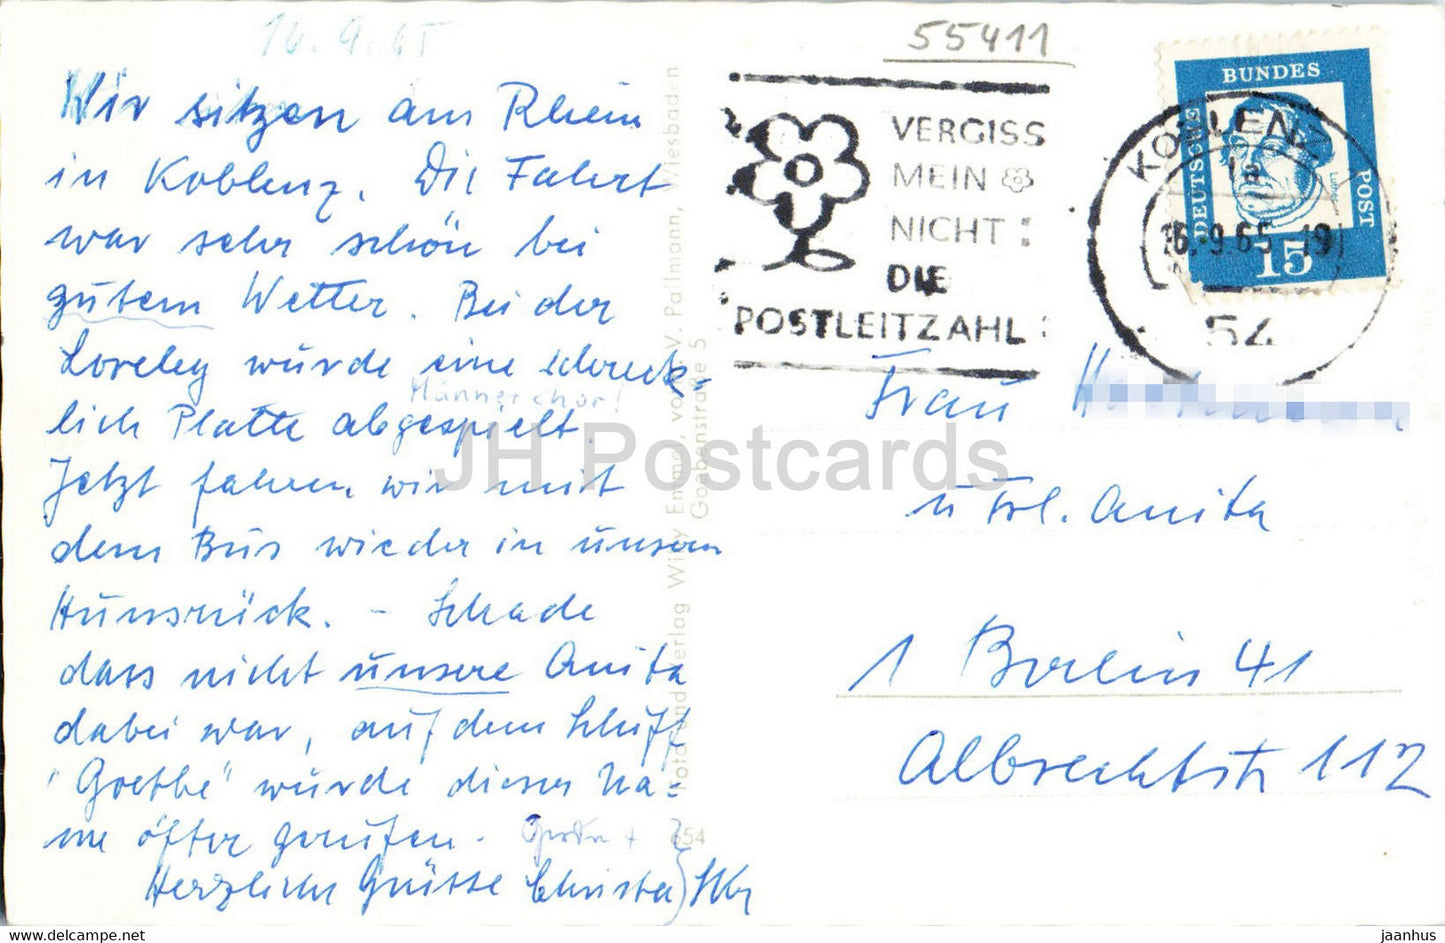 Bingen mit Bingerbruck - Mauseturm - Ruine Ehrenfels und Niederwalddenkmal - old postcard - 1965 - Germany - used